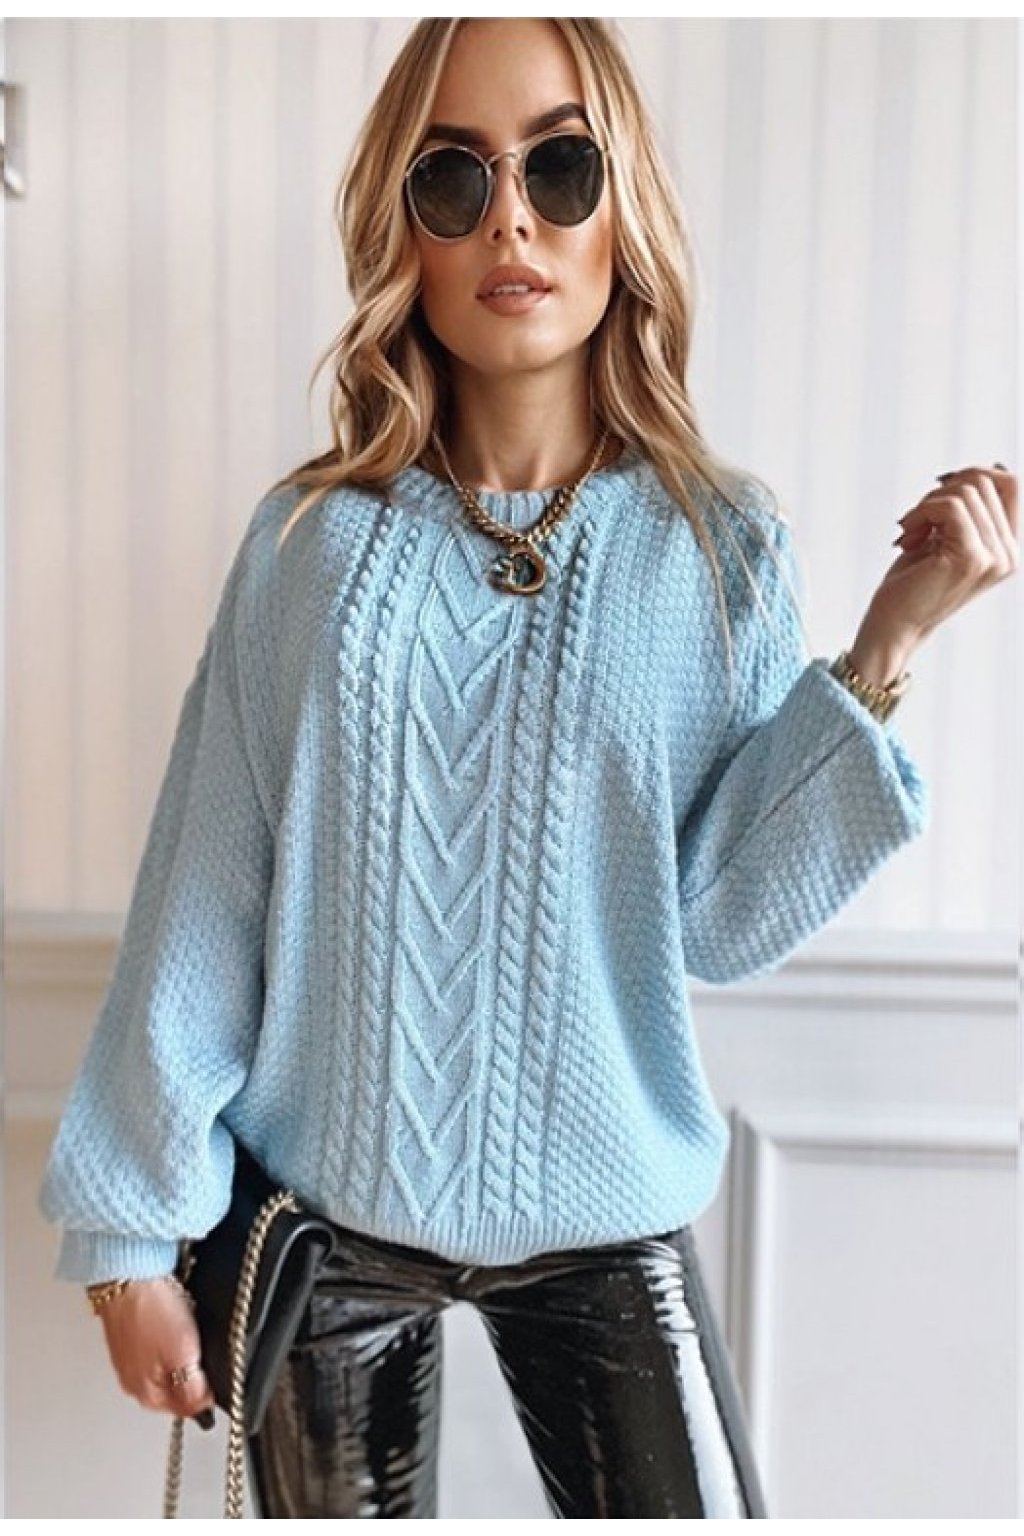 Modrý dámský svetr | FASHIONSUGAR e-shop